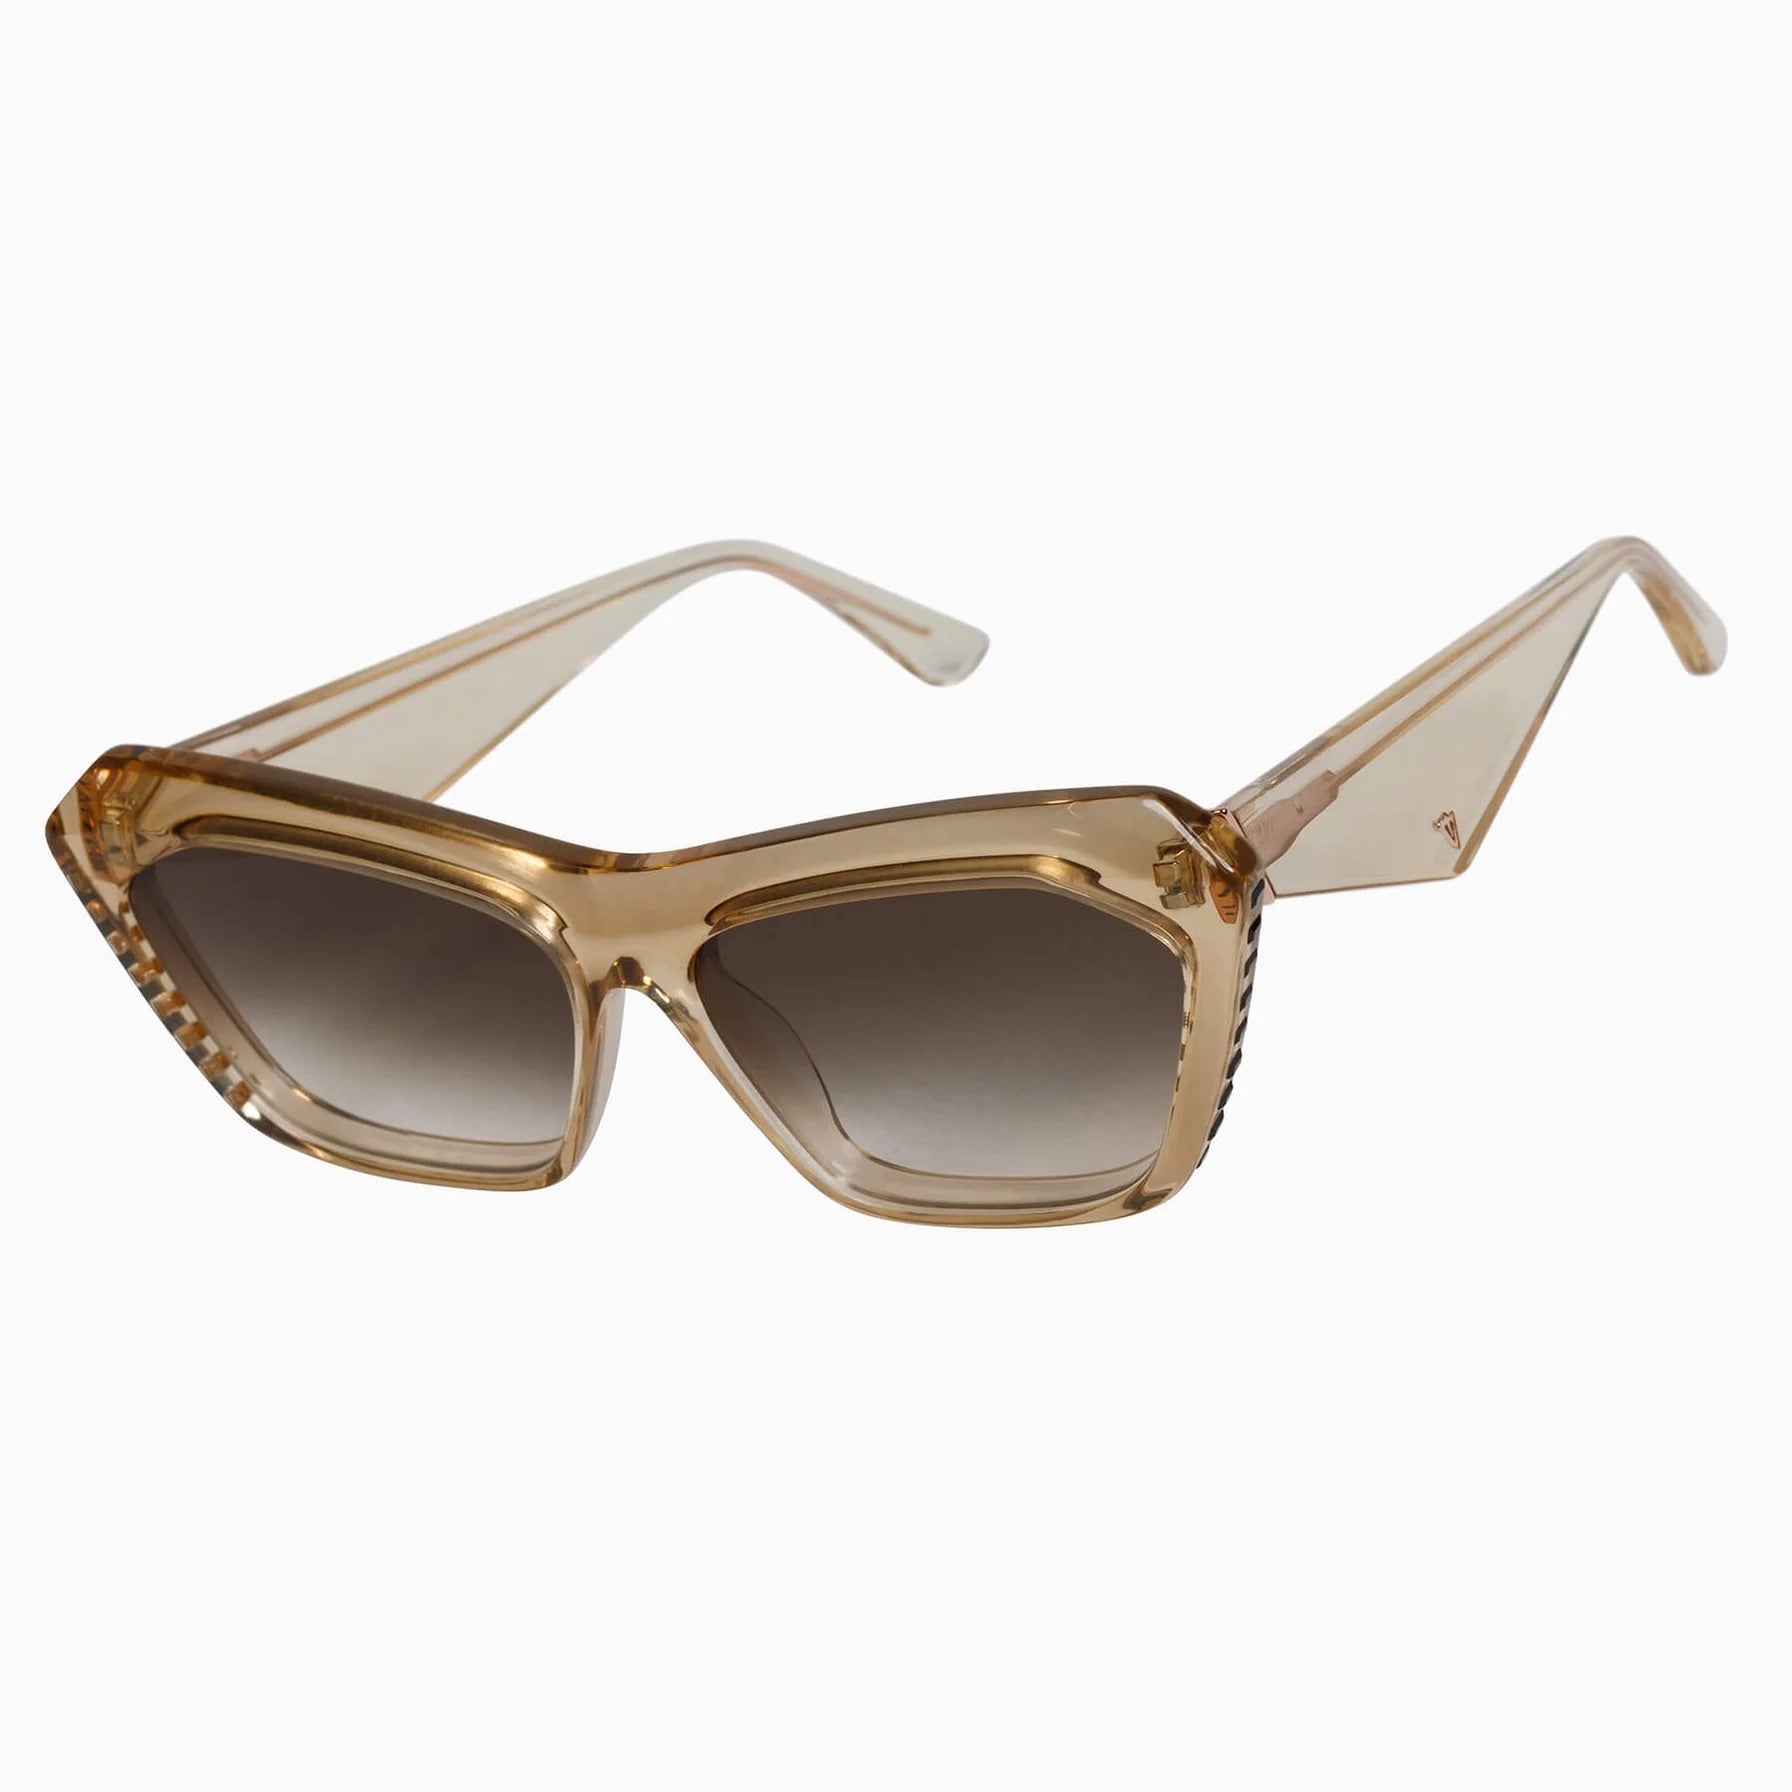 Piaf | Sunglasses - Champagne w. Black Swarovski Crystals Gold Metal Trim / Brown Gradient Lens